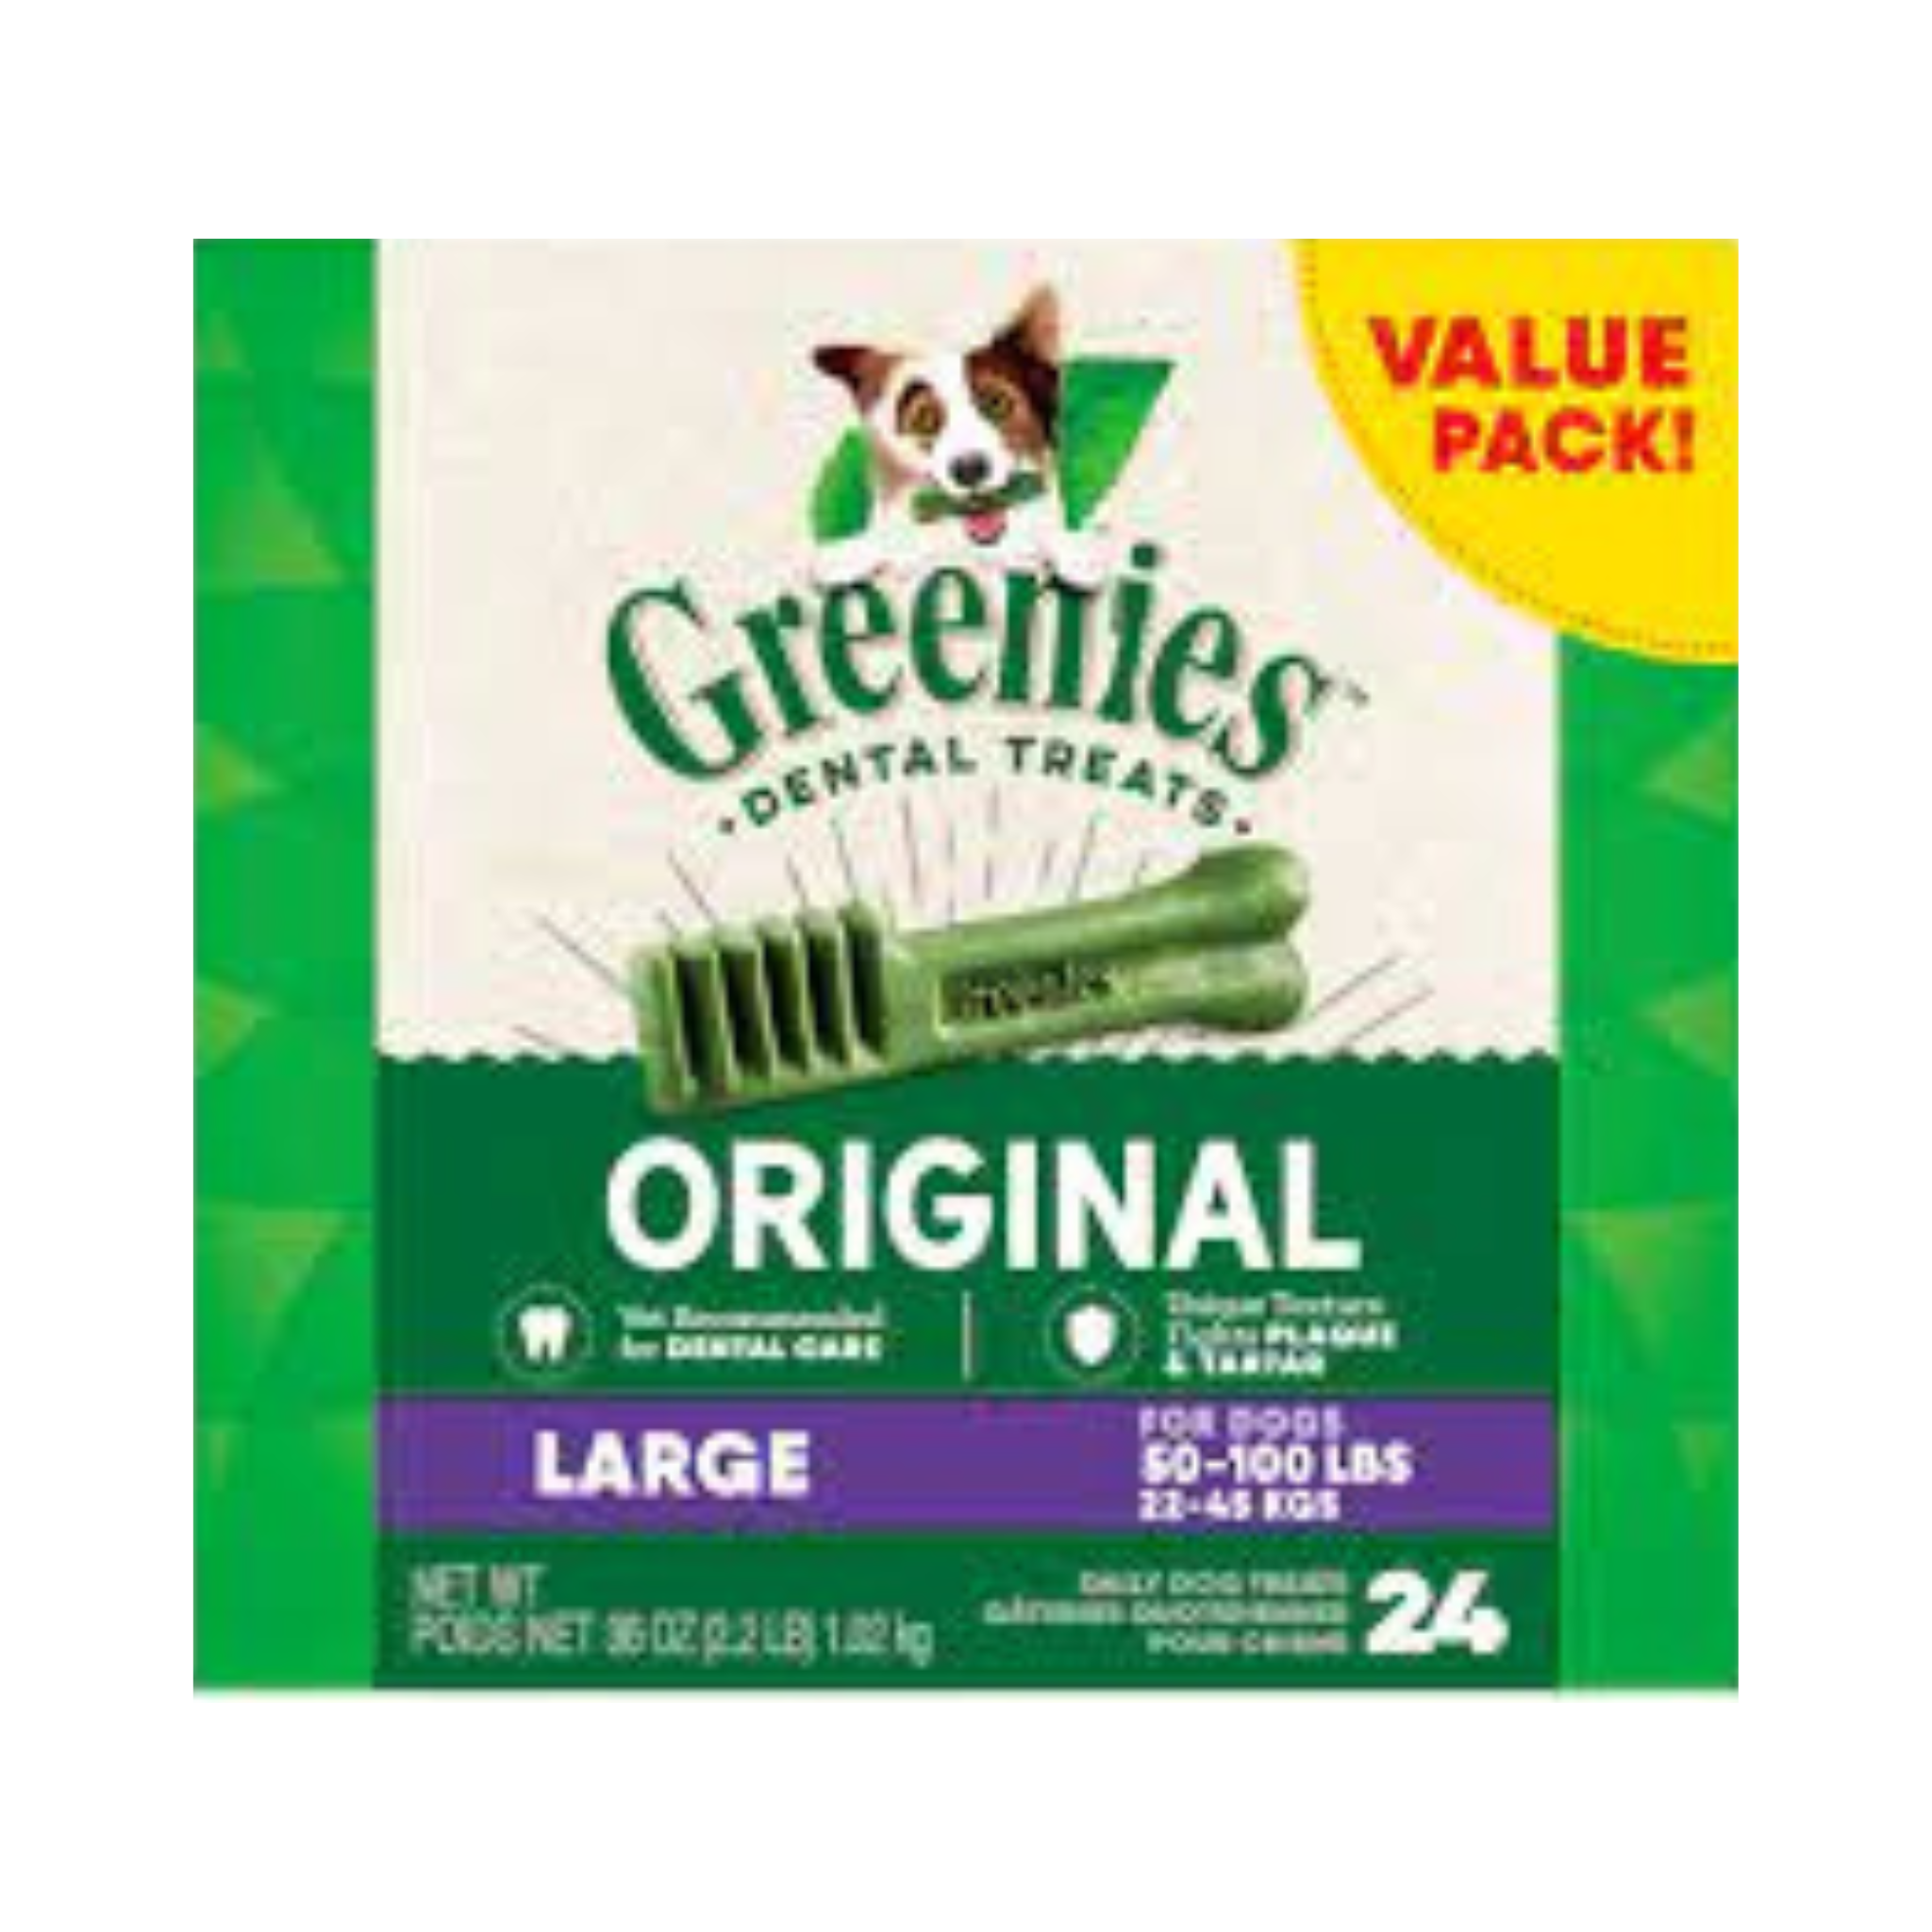 Greenies Dental Dog Treats- Large